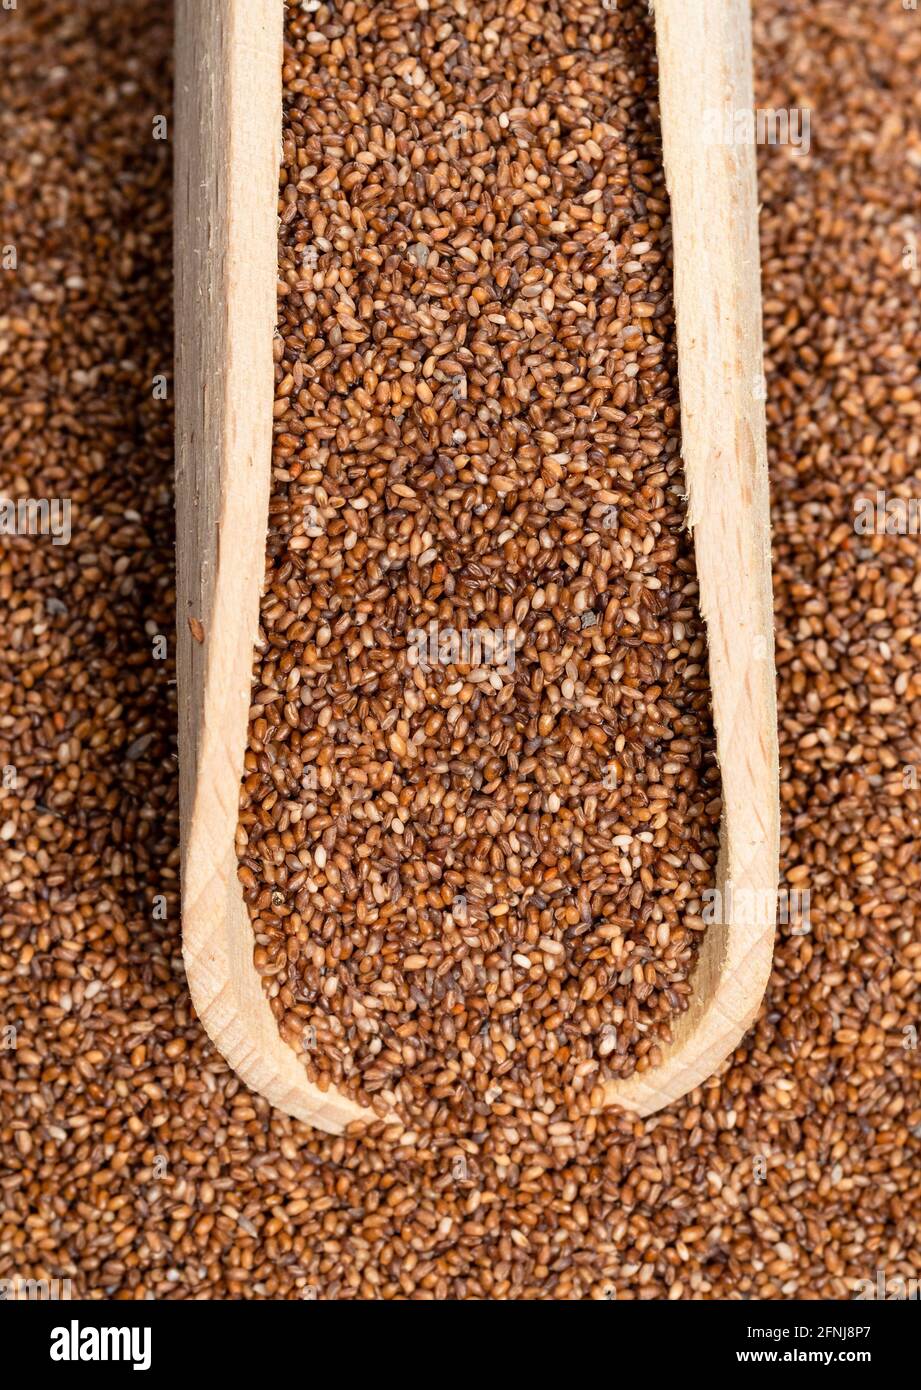 top view of wood scoop on pile of wholegrain teff seeds closeup Stock Photo